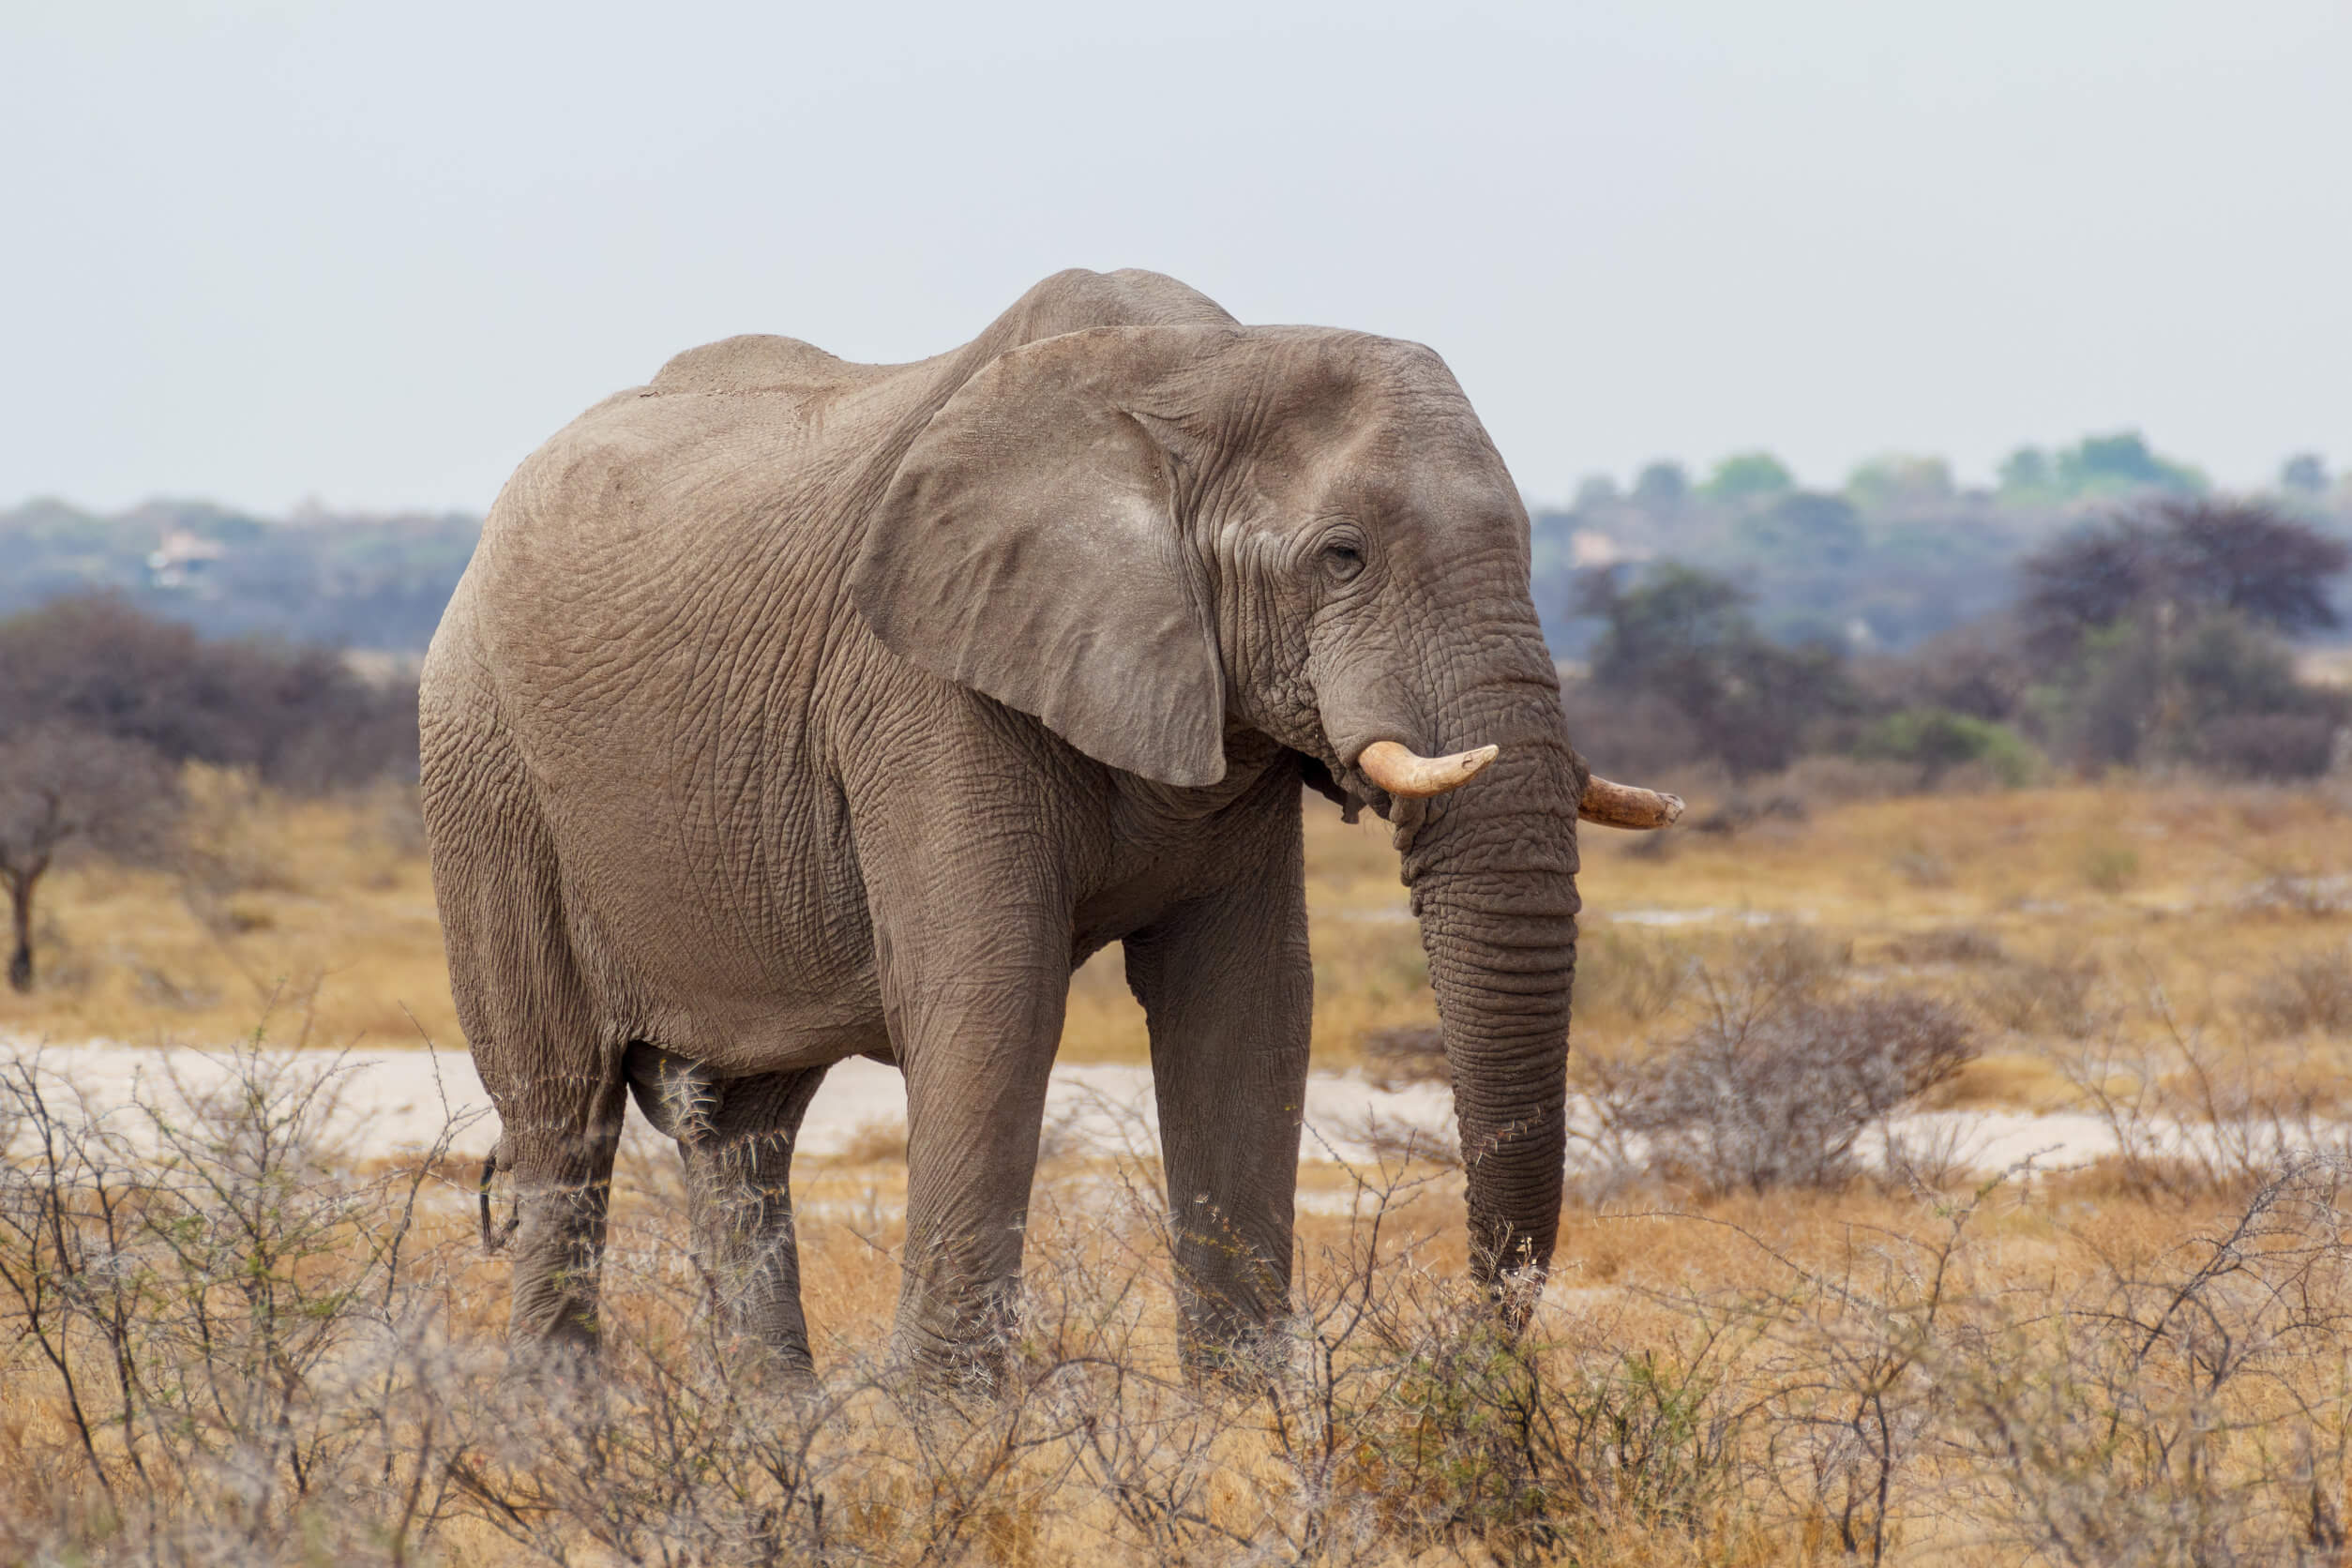 Cazador fallece aplastado por un elefante luego de haber asesinado a sus crías